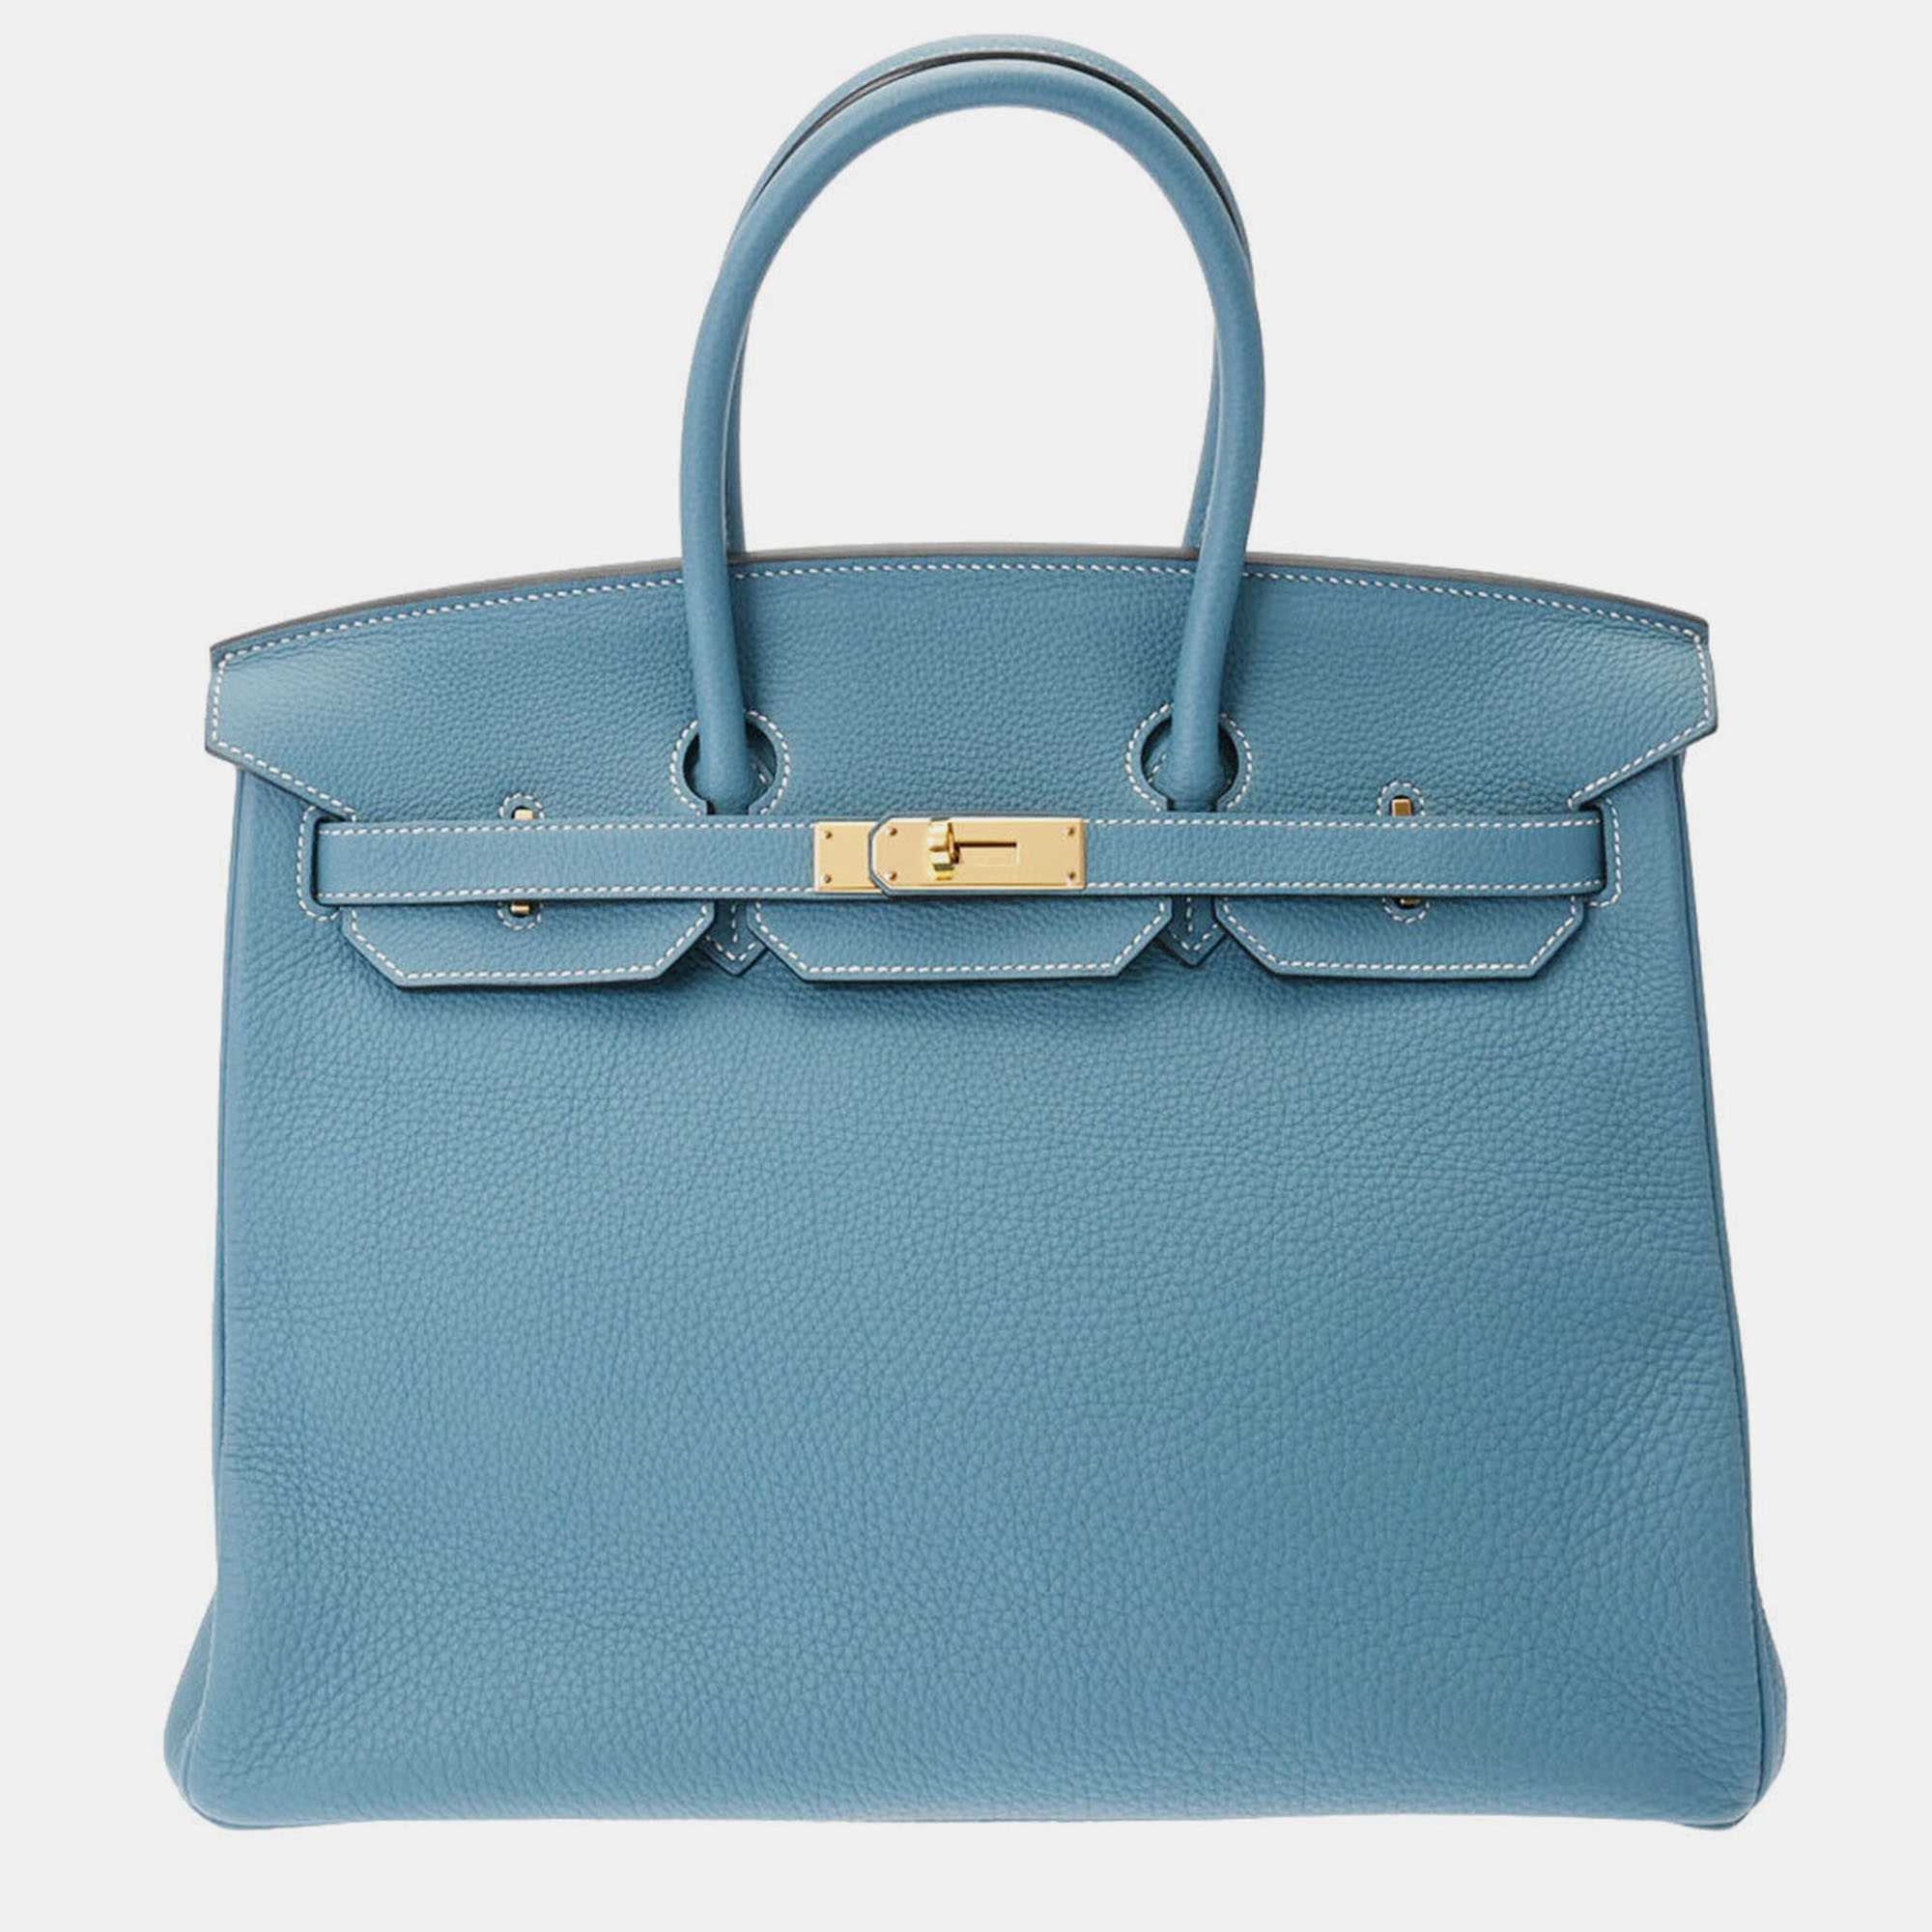 

Hermes Blue Togo Leather Birkin 35 Handbag